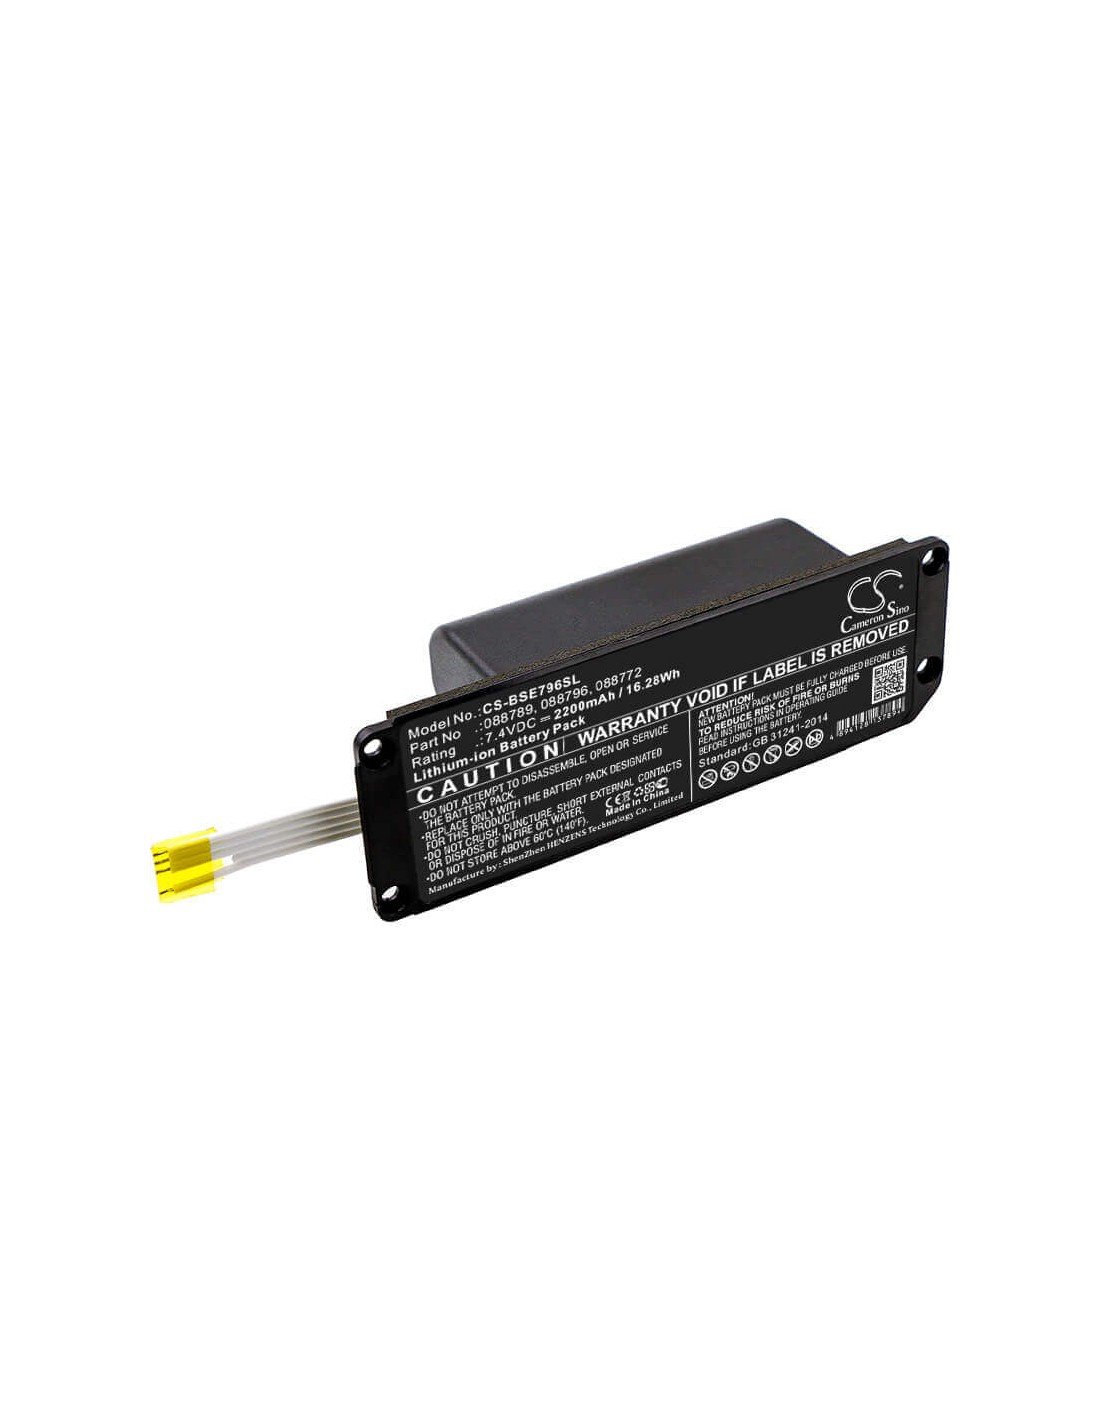 Battery for Bose, Soundlink Mini 2 7.4V, 2200mAh - 16.28Wh